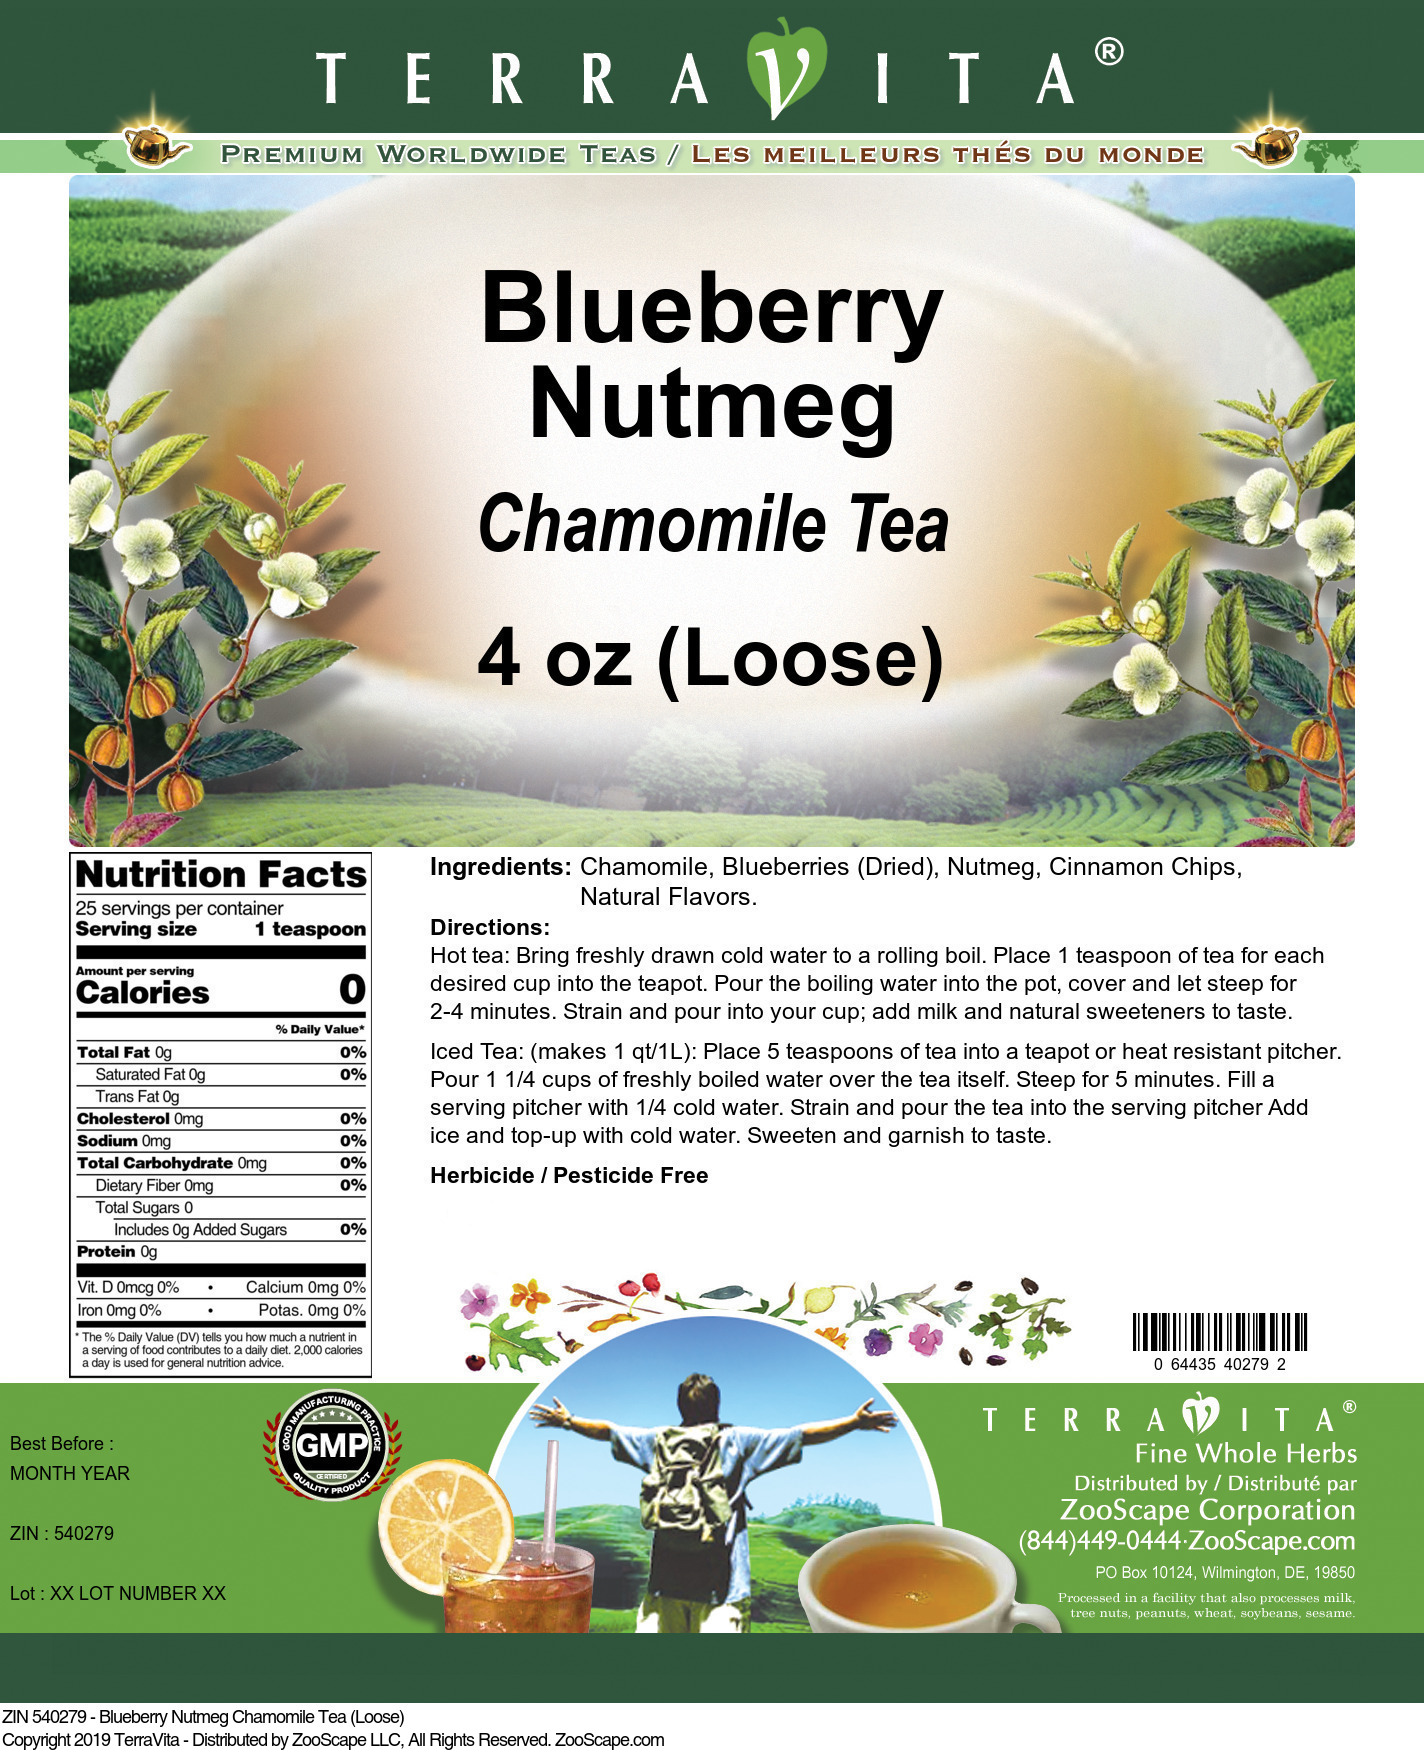 Blueberry Nutmeg Chamomile Tea (Loose) - Label